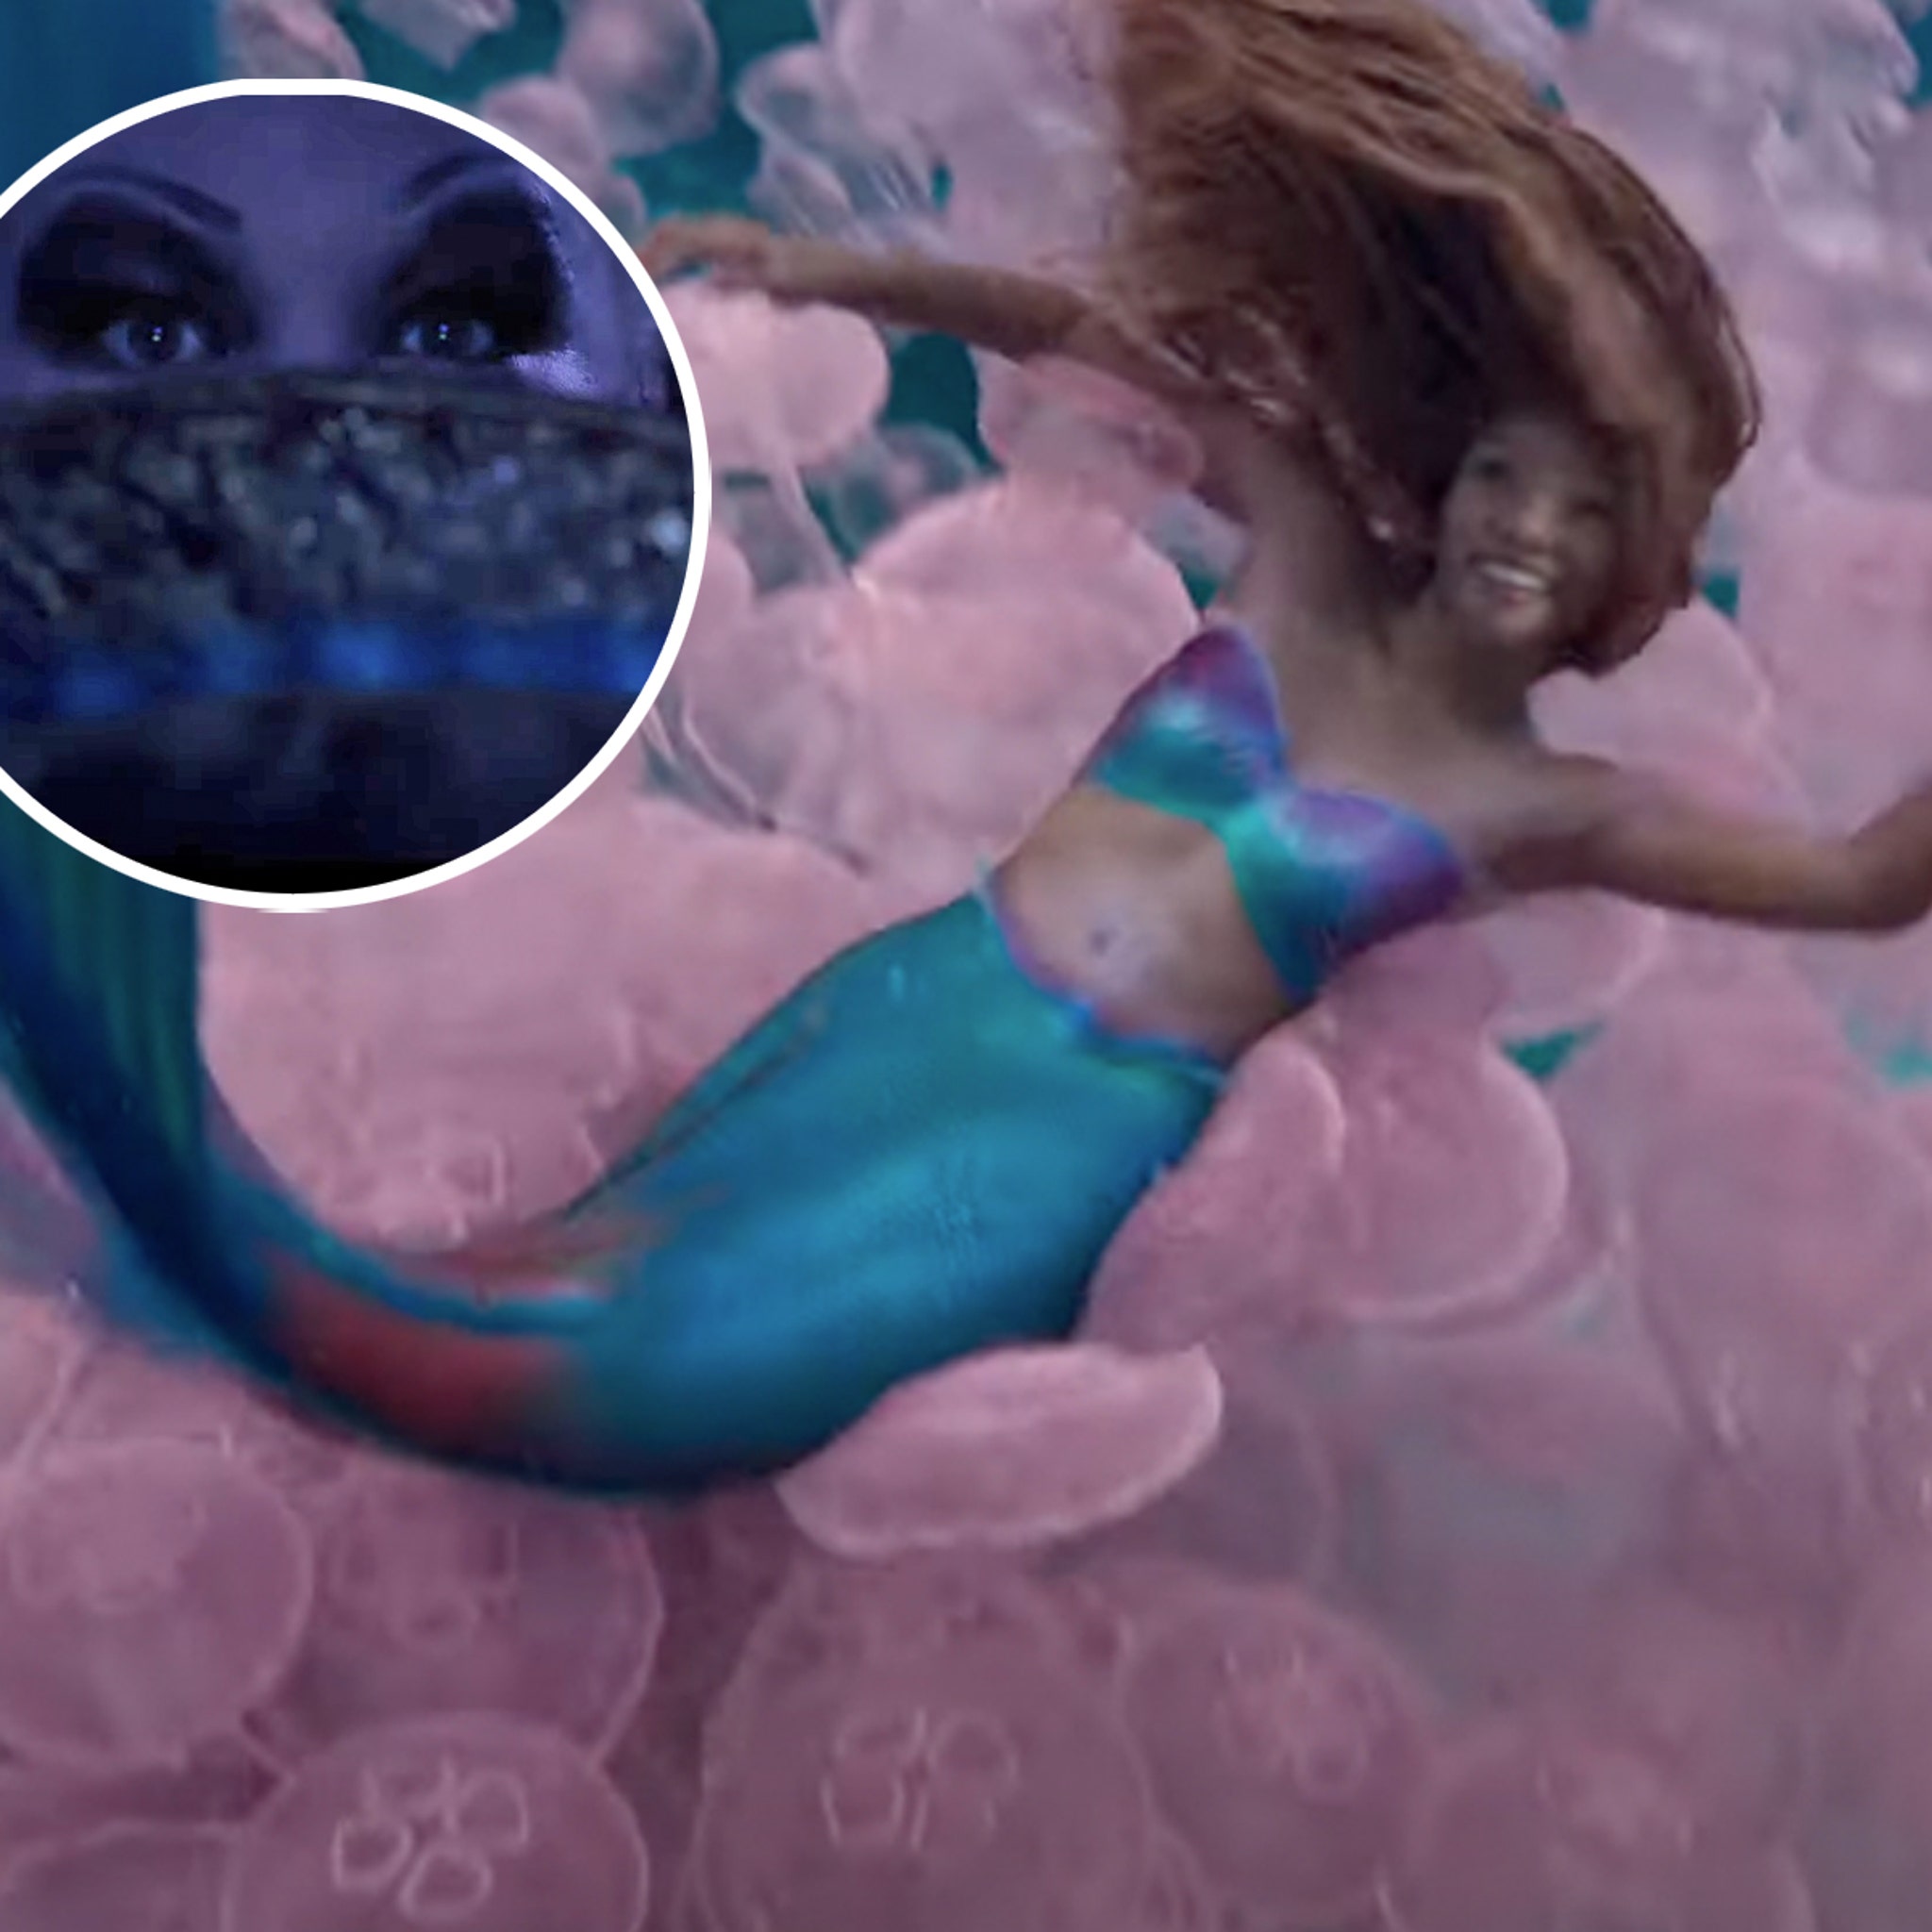 The Little Mermaid Teaser Trailer Reveals Melissa McCarthy's Ursula